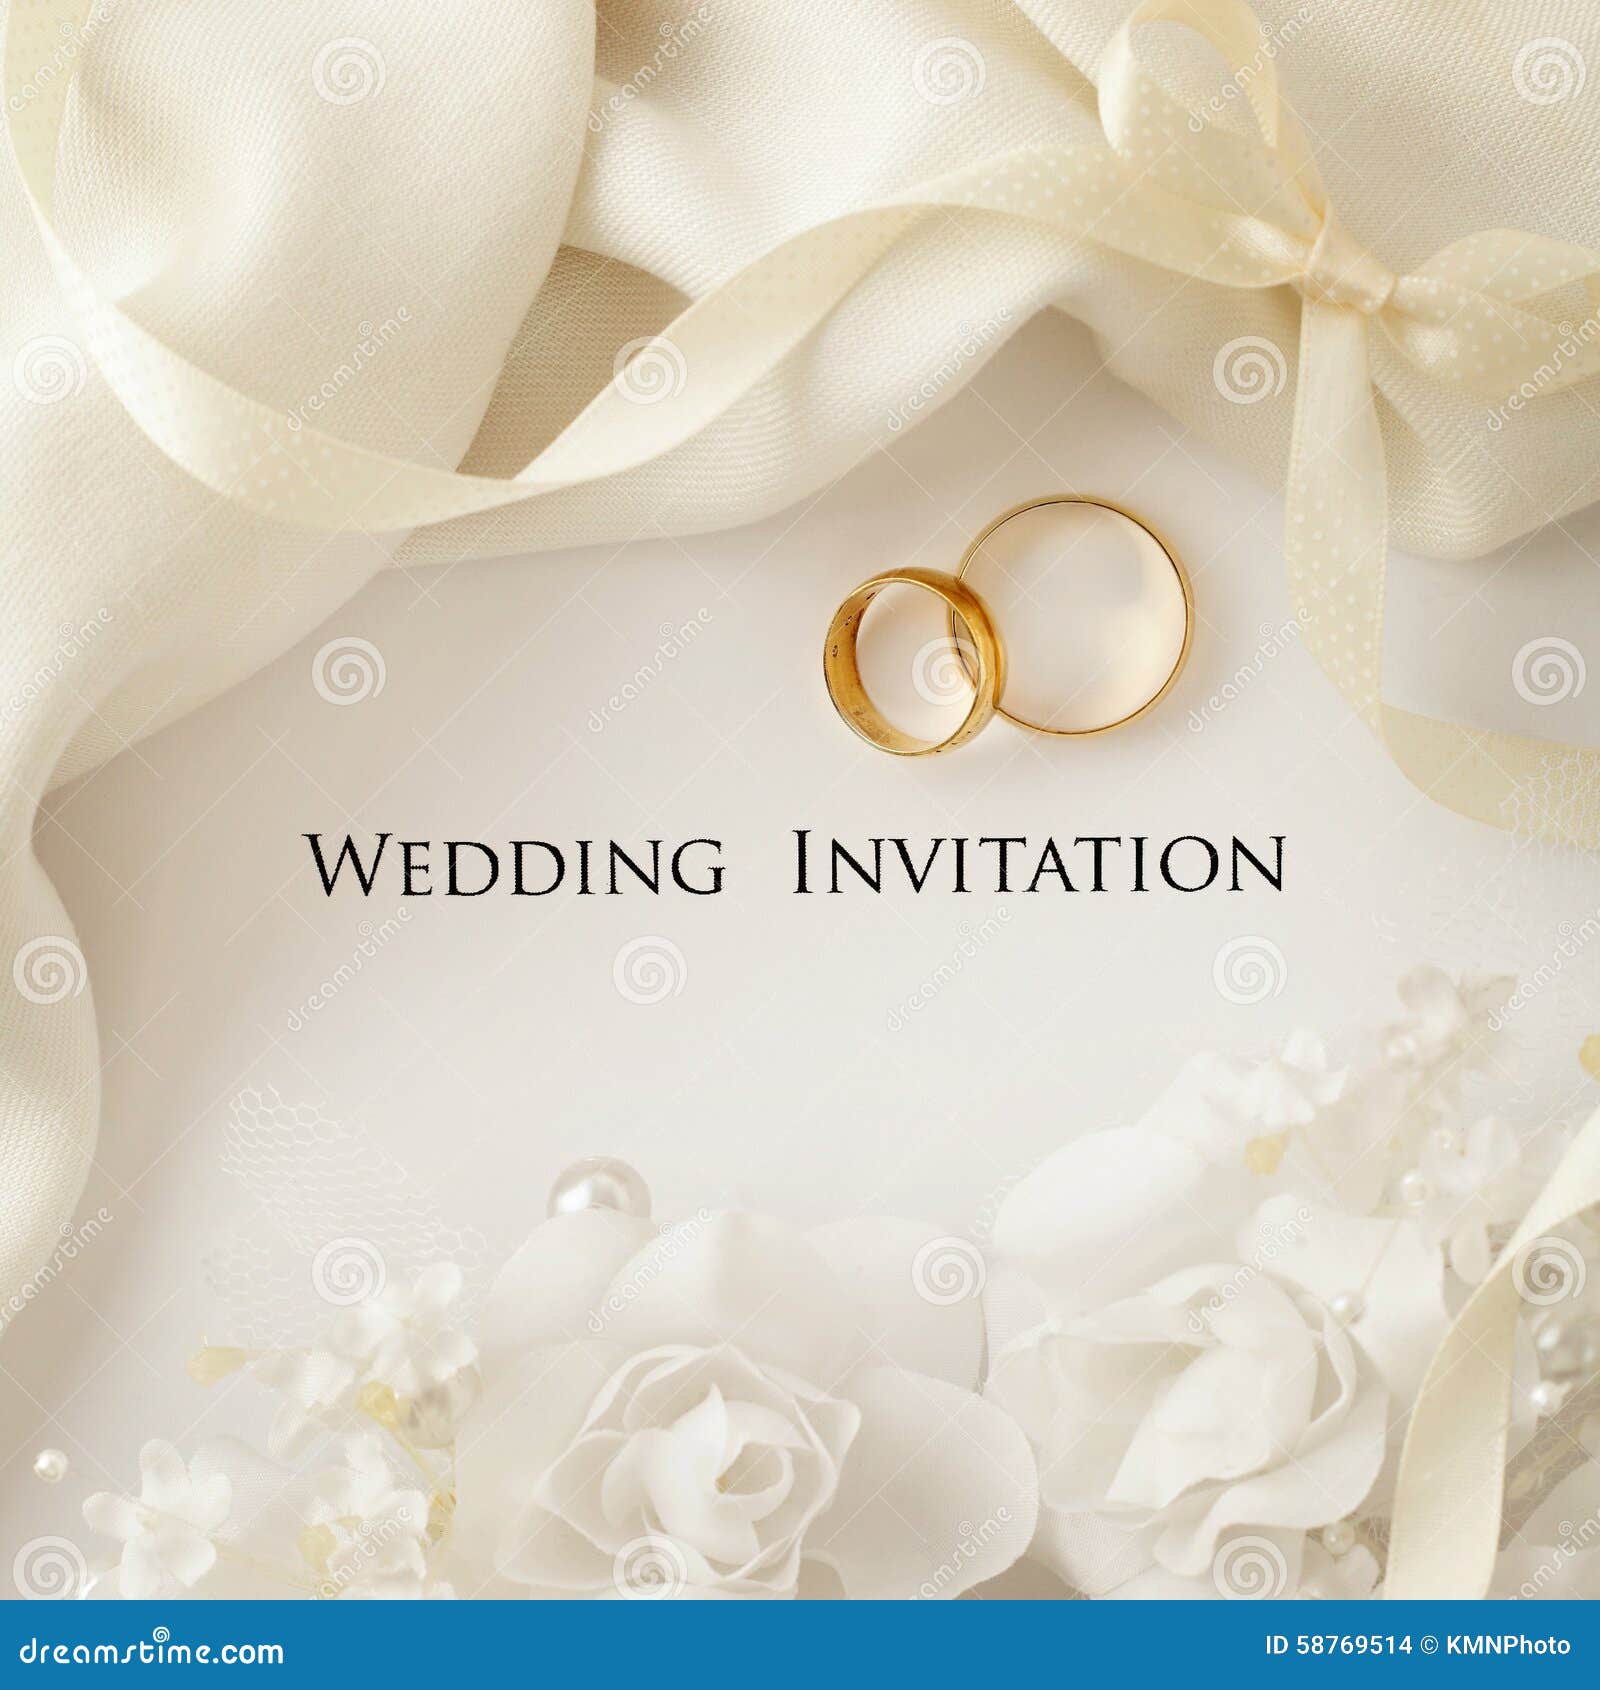 Two rings wedding invitations